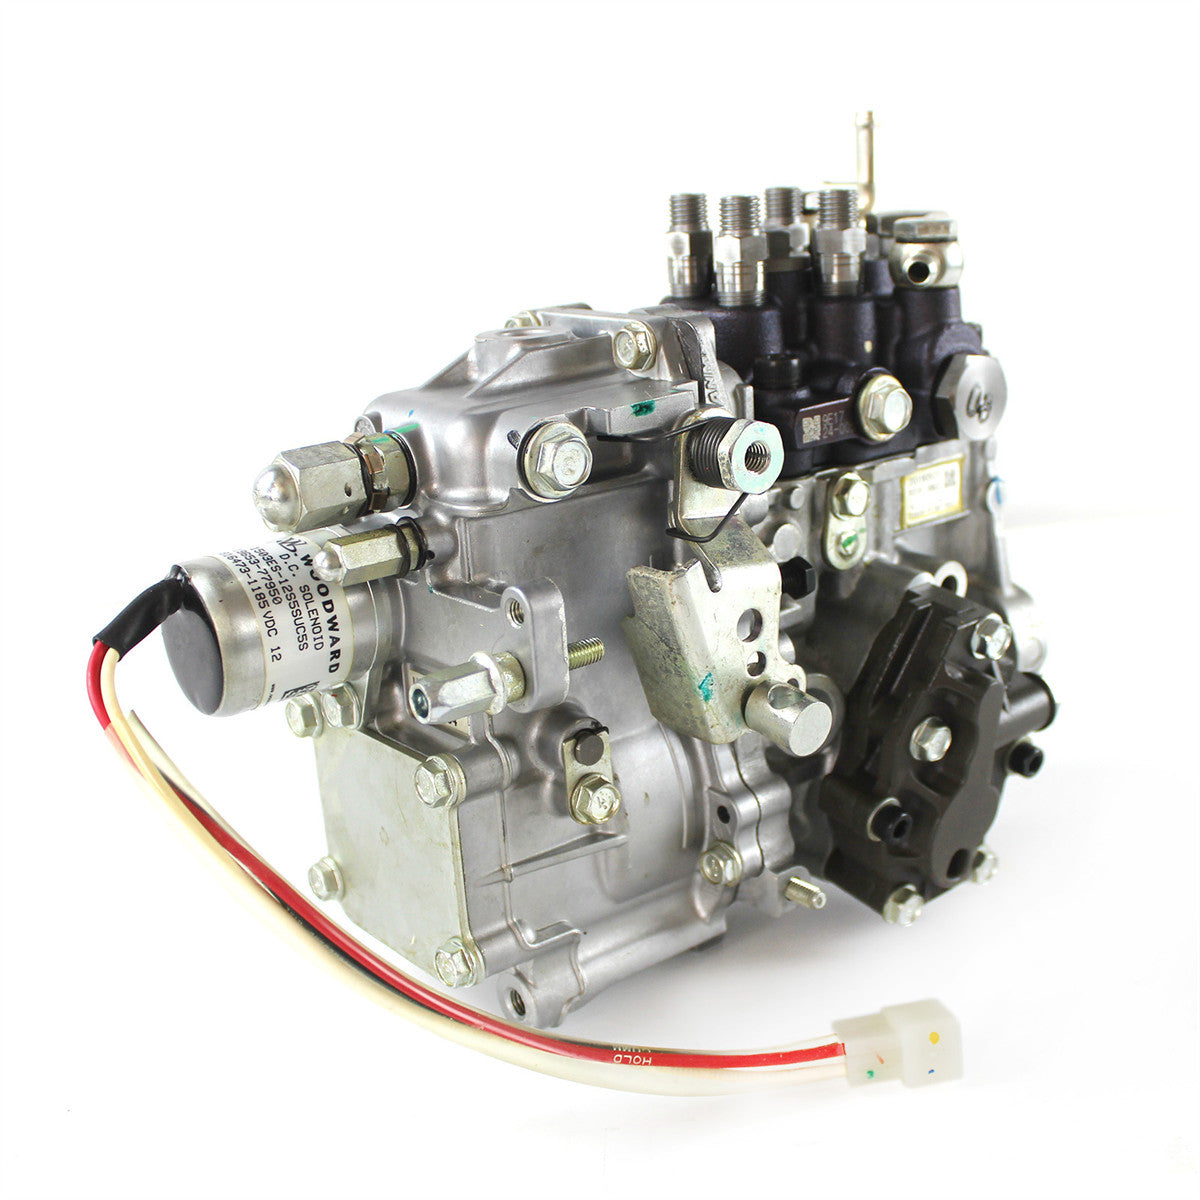 729659-51360 Diesel Fuel Injection Pump for Yanmar 4TNV88 Engine - Sinocmp